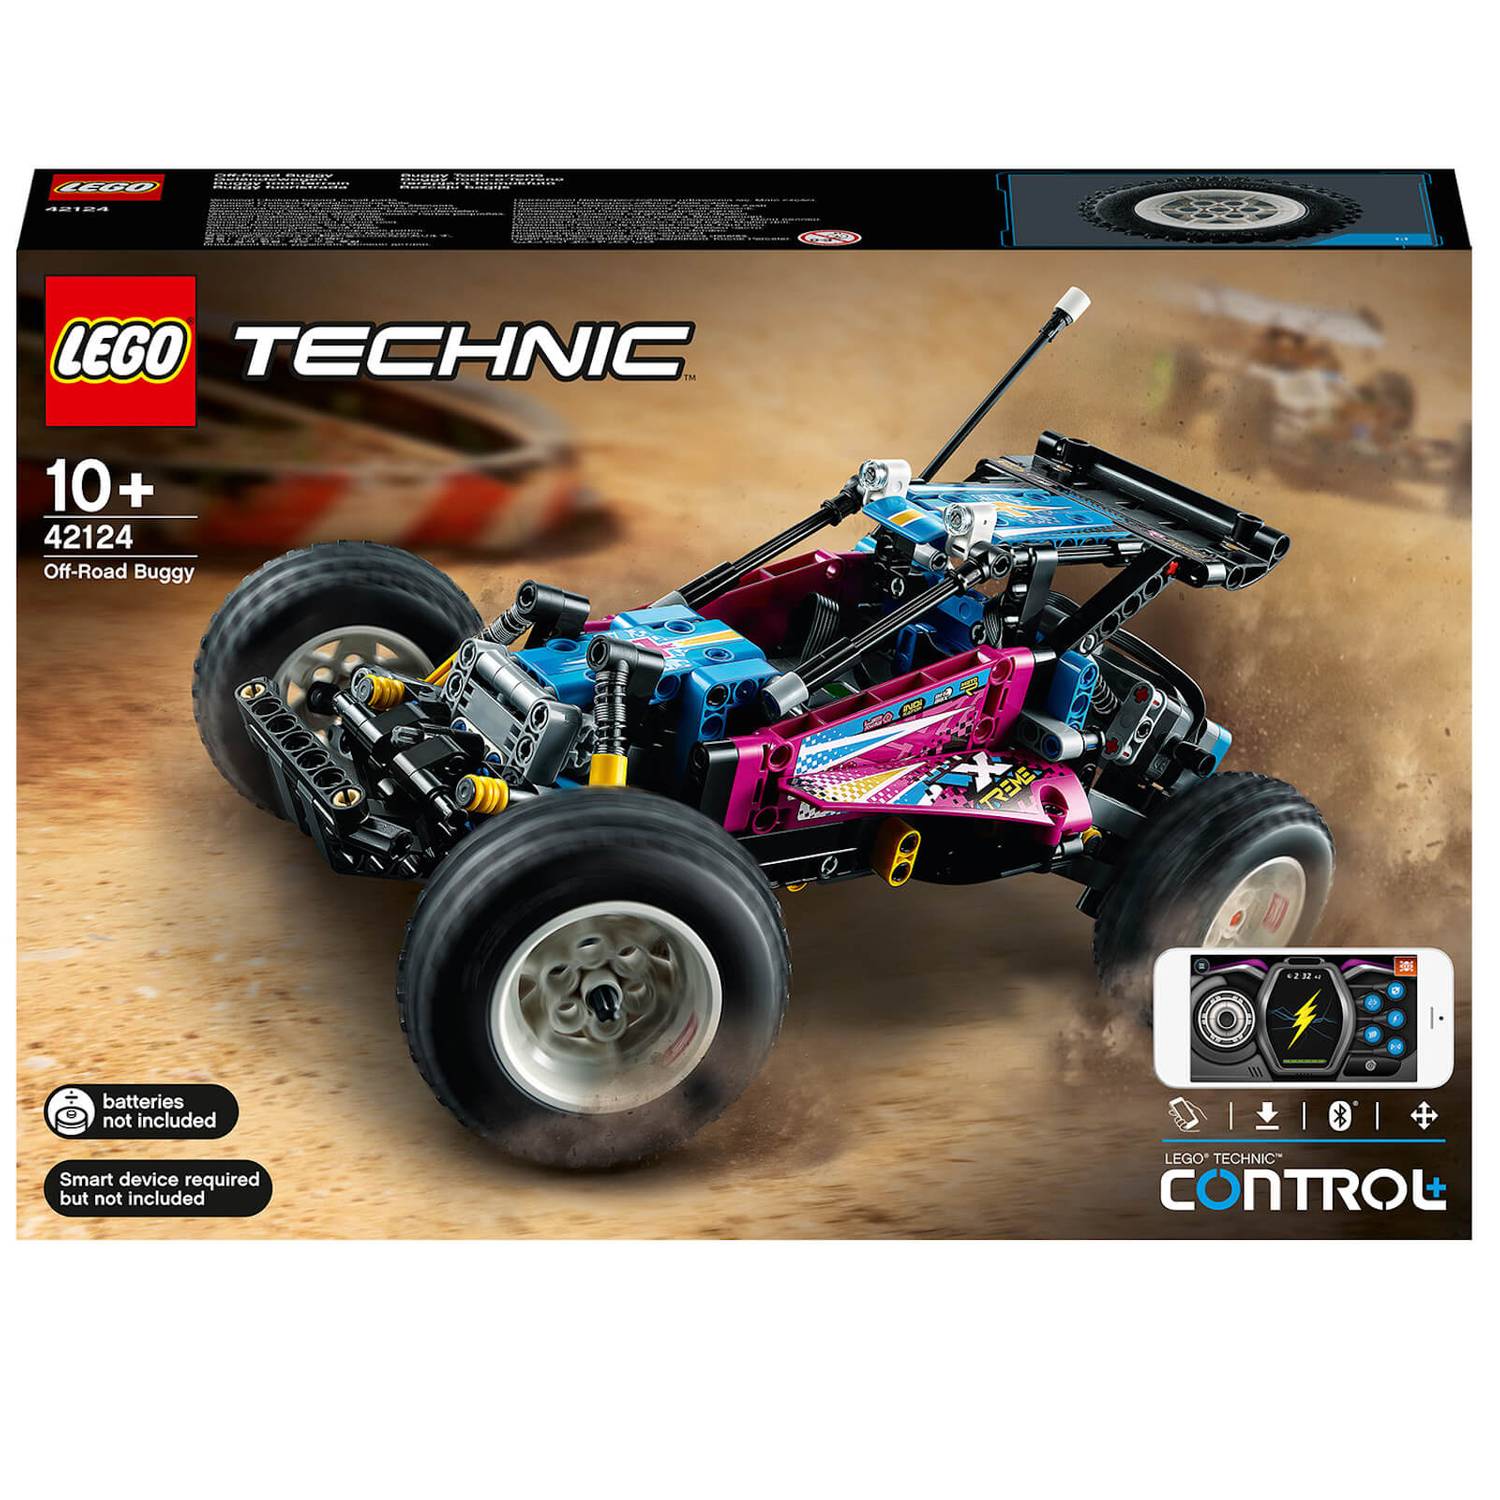 Lego 科技组 可遥控越野车 (42124)